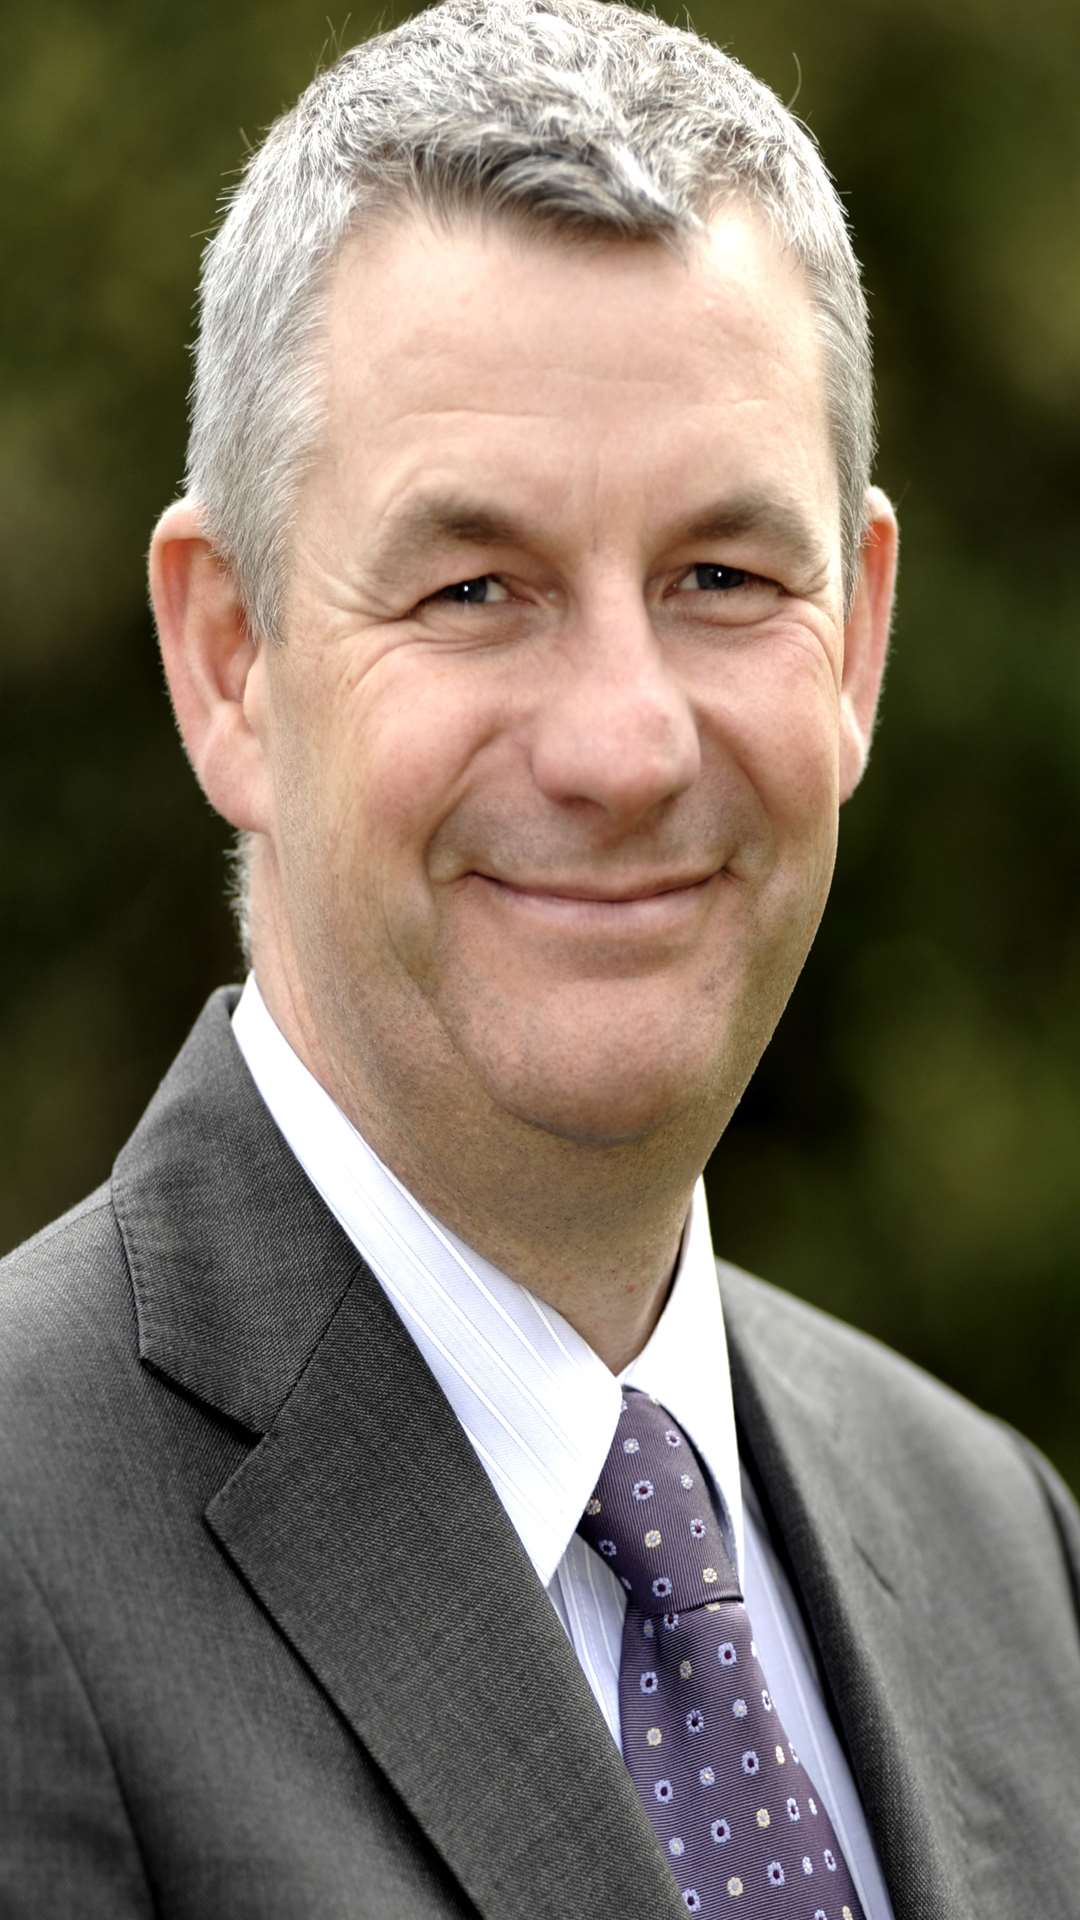 Geraint Davies, acting chief executive at South East Coast Ambulance Service